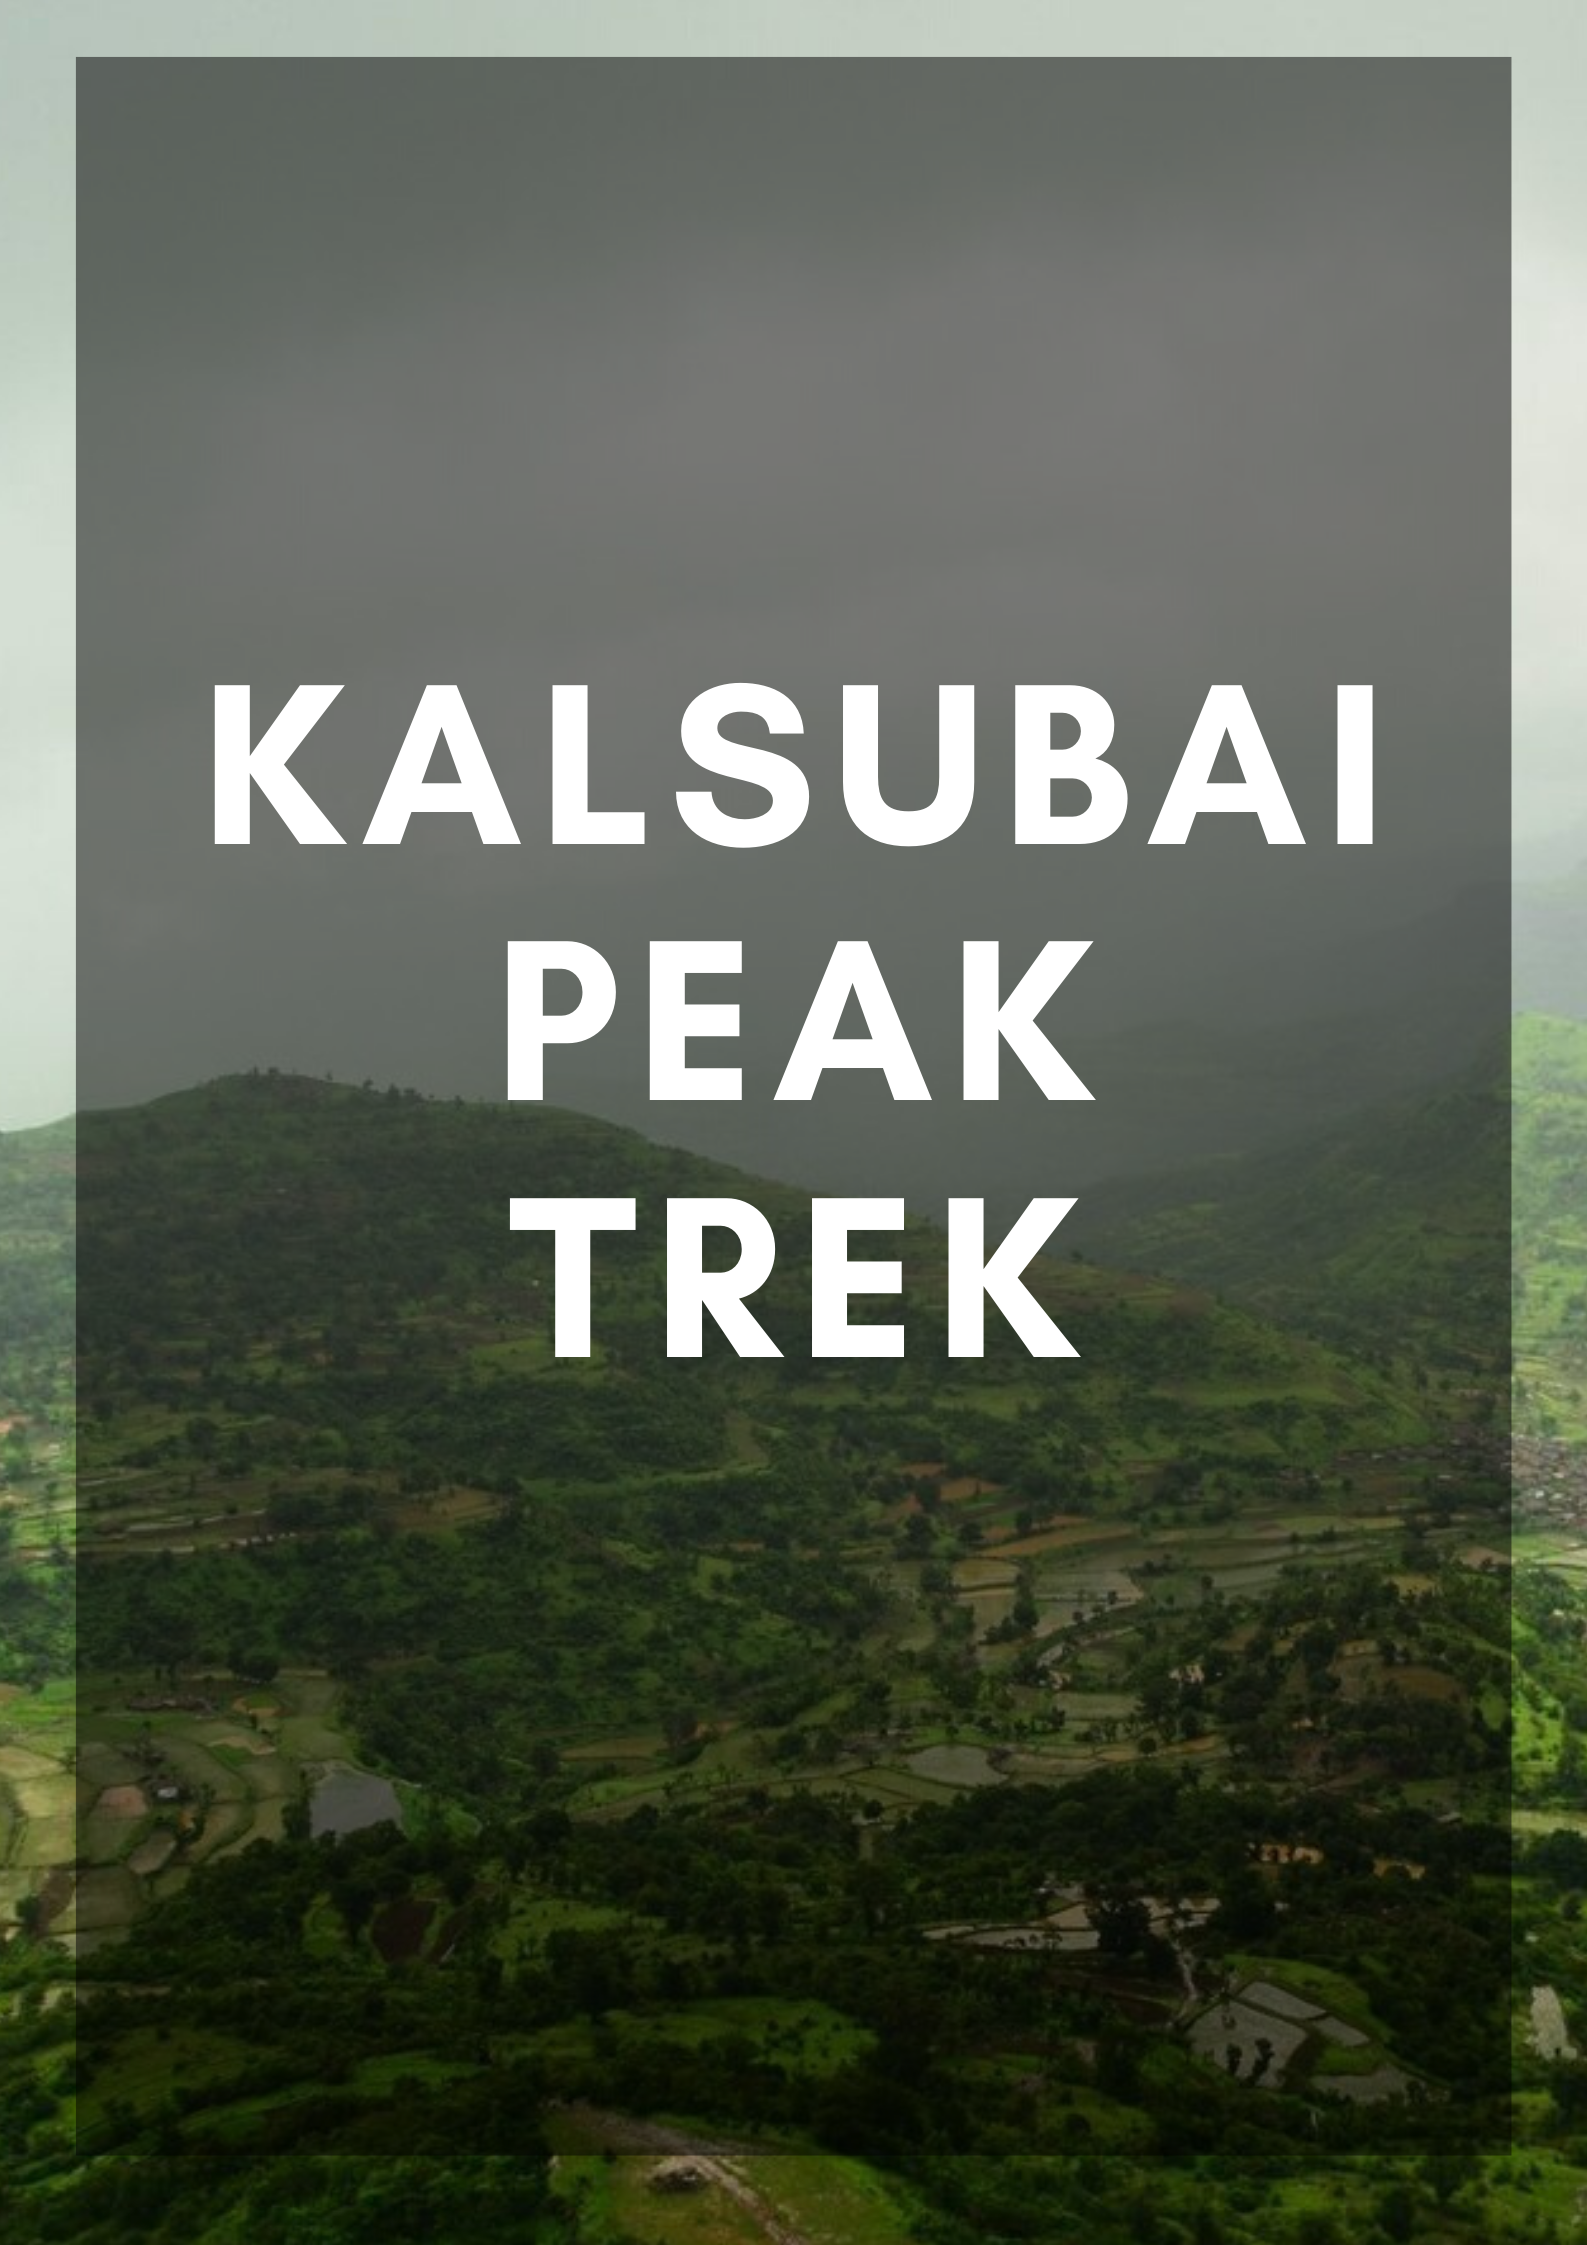 Kalsubai Trek Guide Mumbai